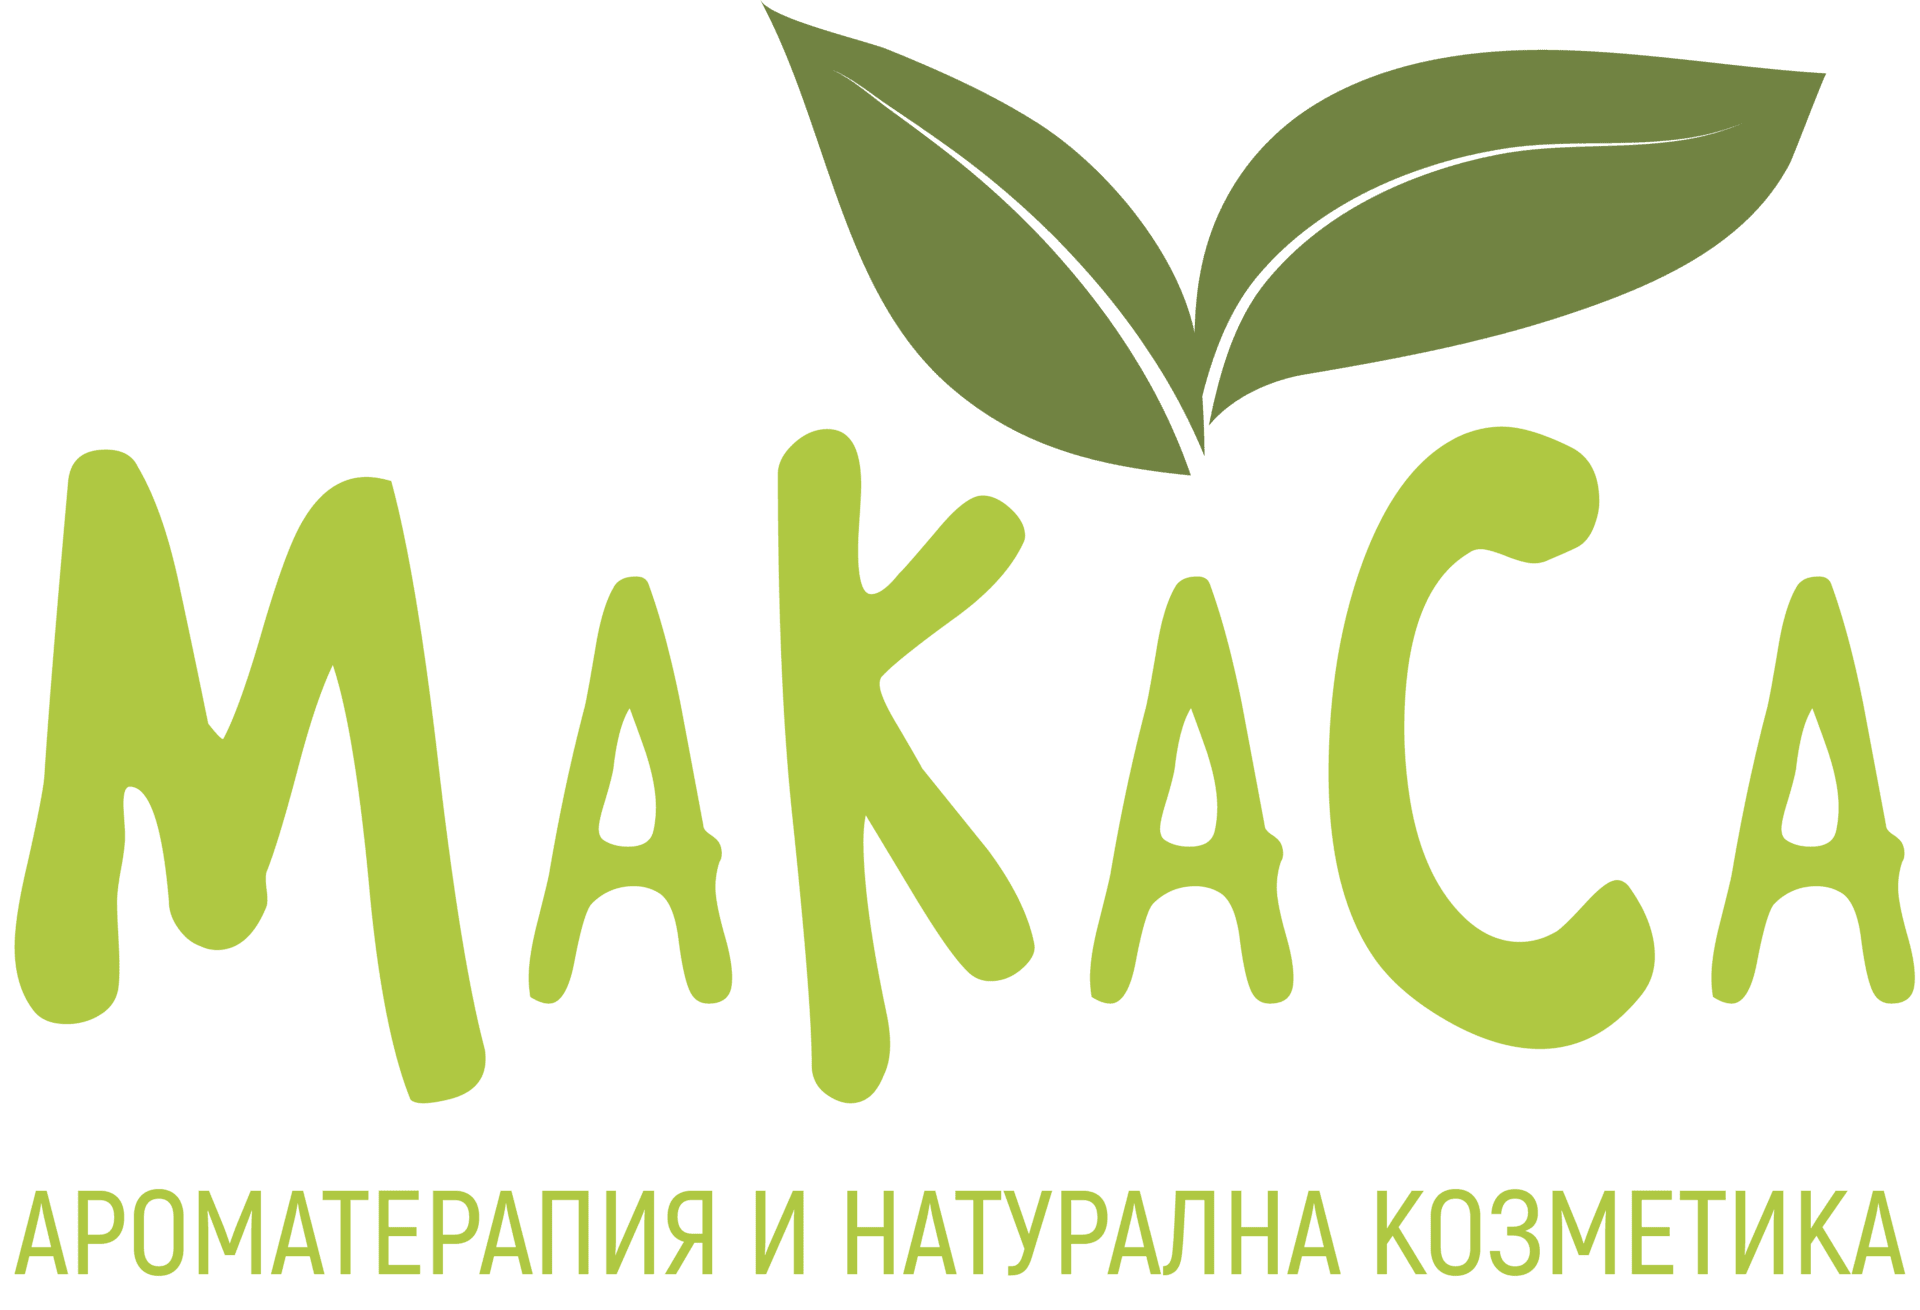 makasa.org